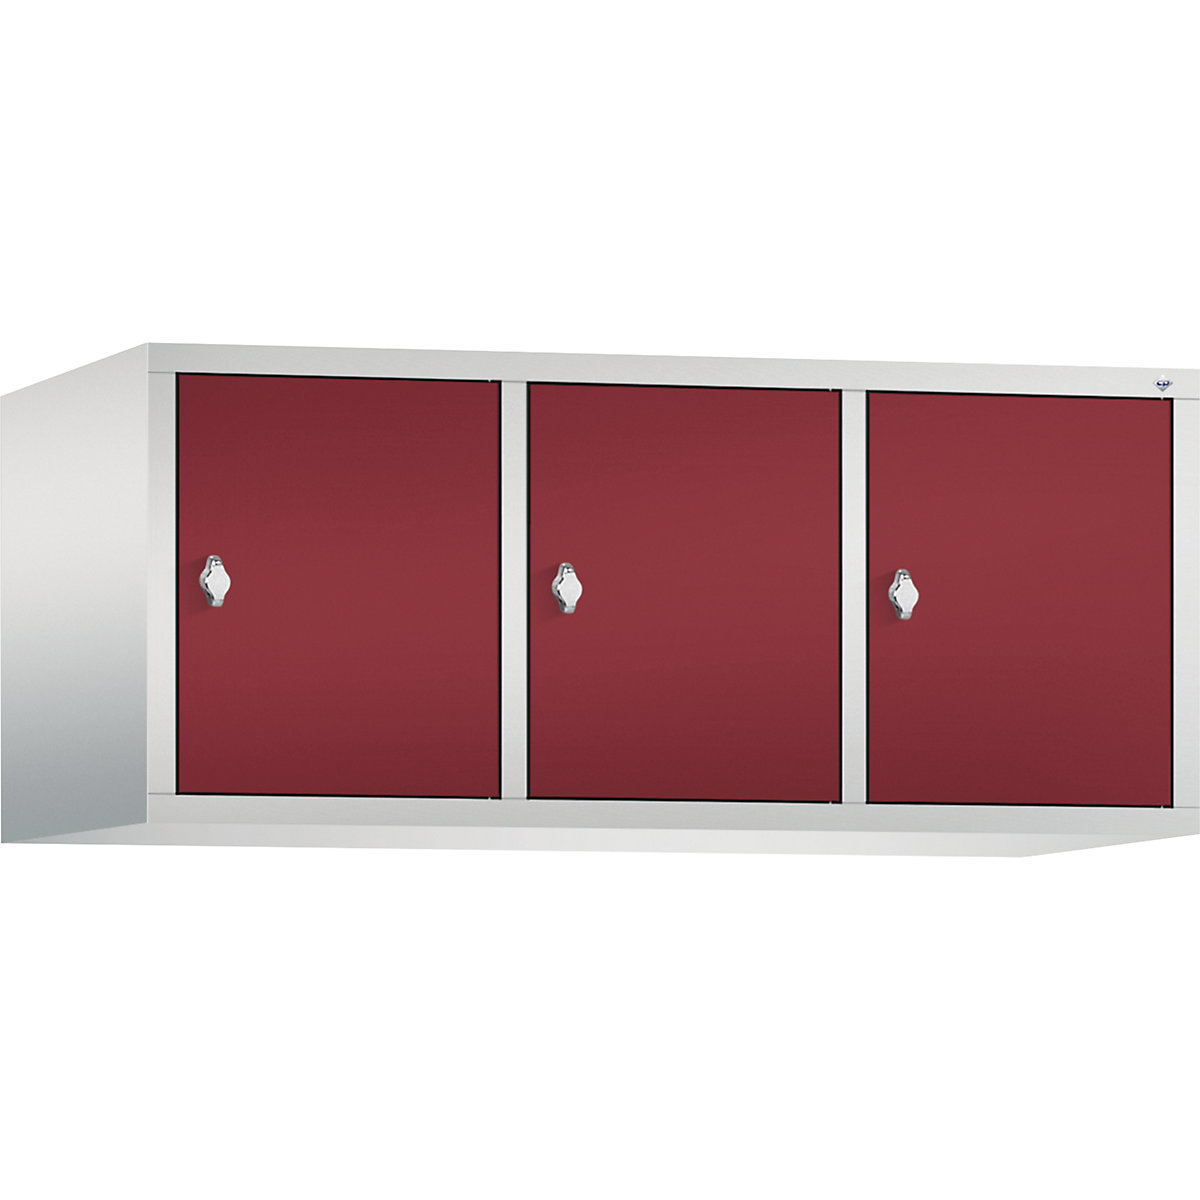 C+P – Altillo CLASSIC, 3 compartimentos, anchura de compartimento 400 mm, gris luminoso / rojo rubí